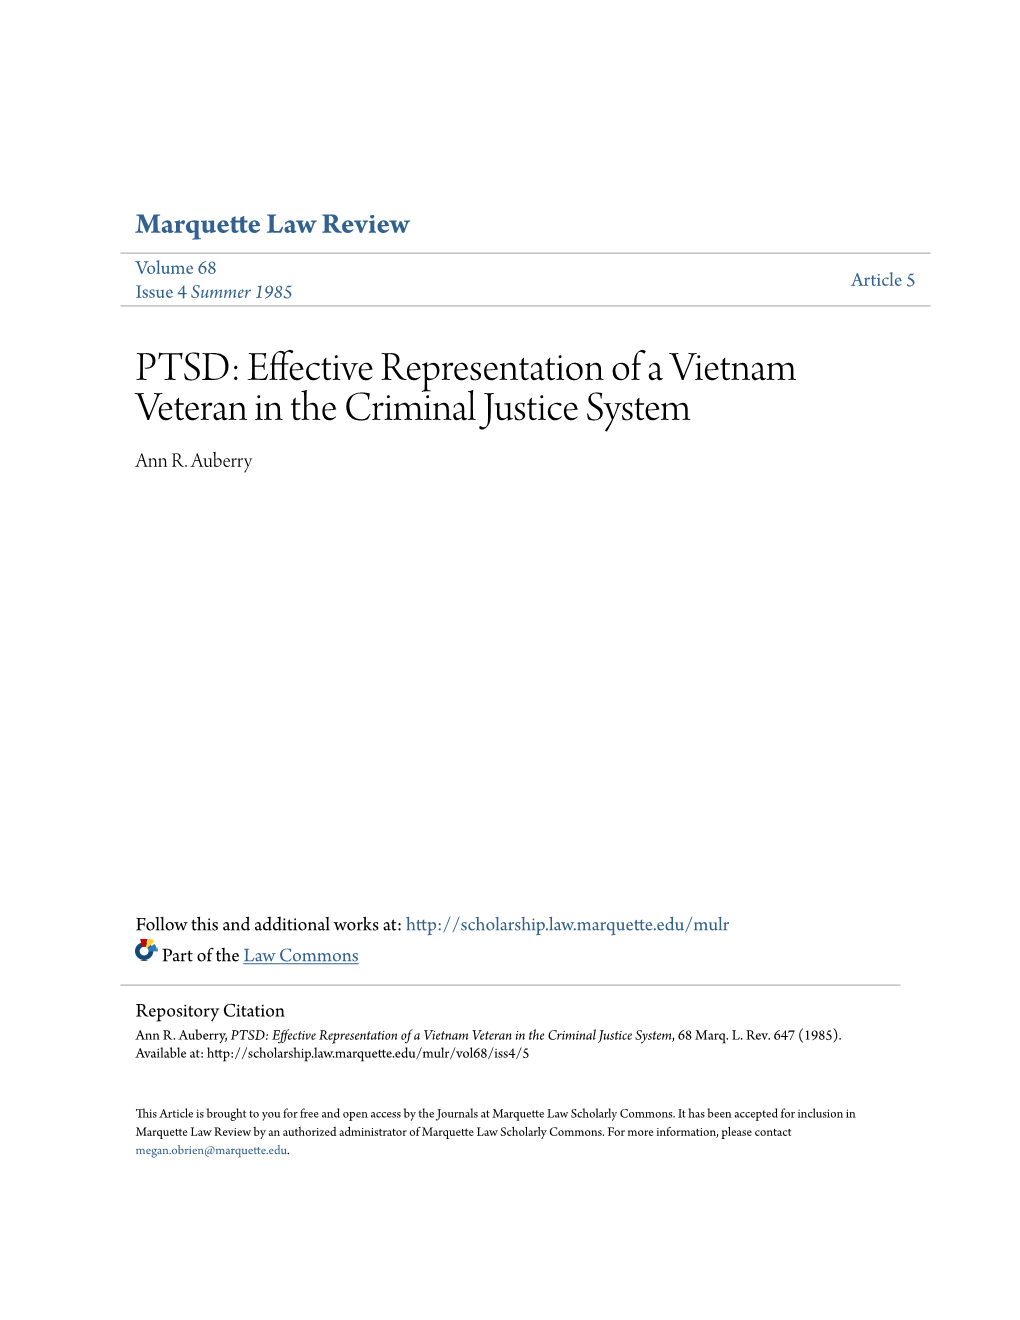 PTSD: Effective Representation of a Vietnam Veteran in the Criminal Justice System Ann R